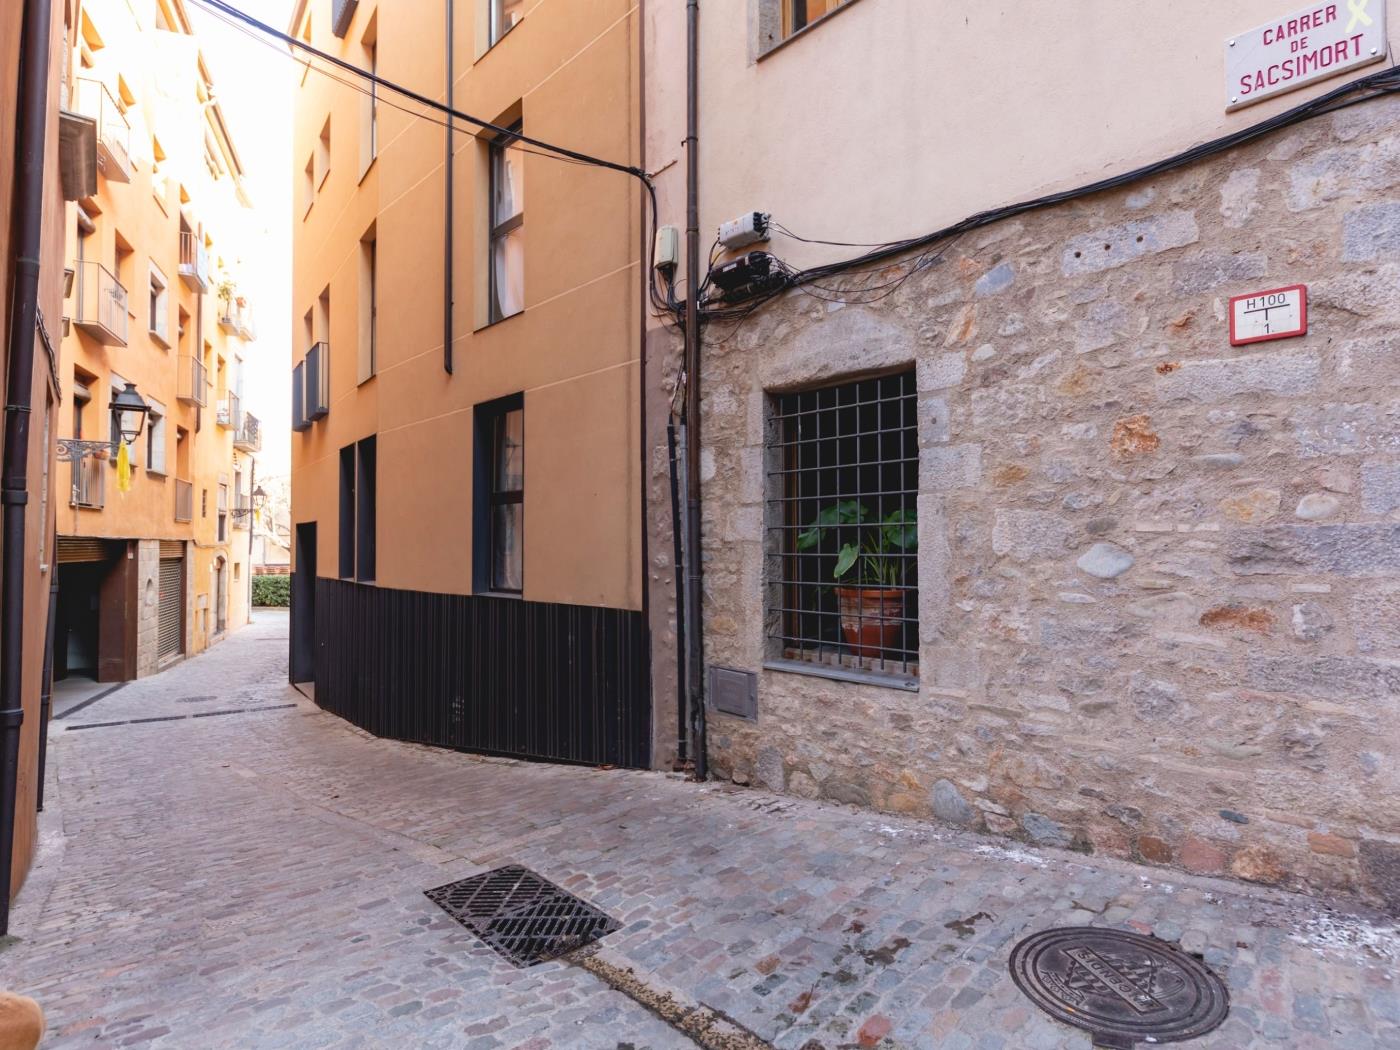 Bravissimo Sacsimort, ampli pis de dos nivells a Girona